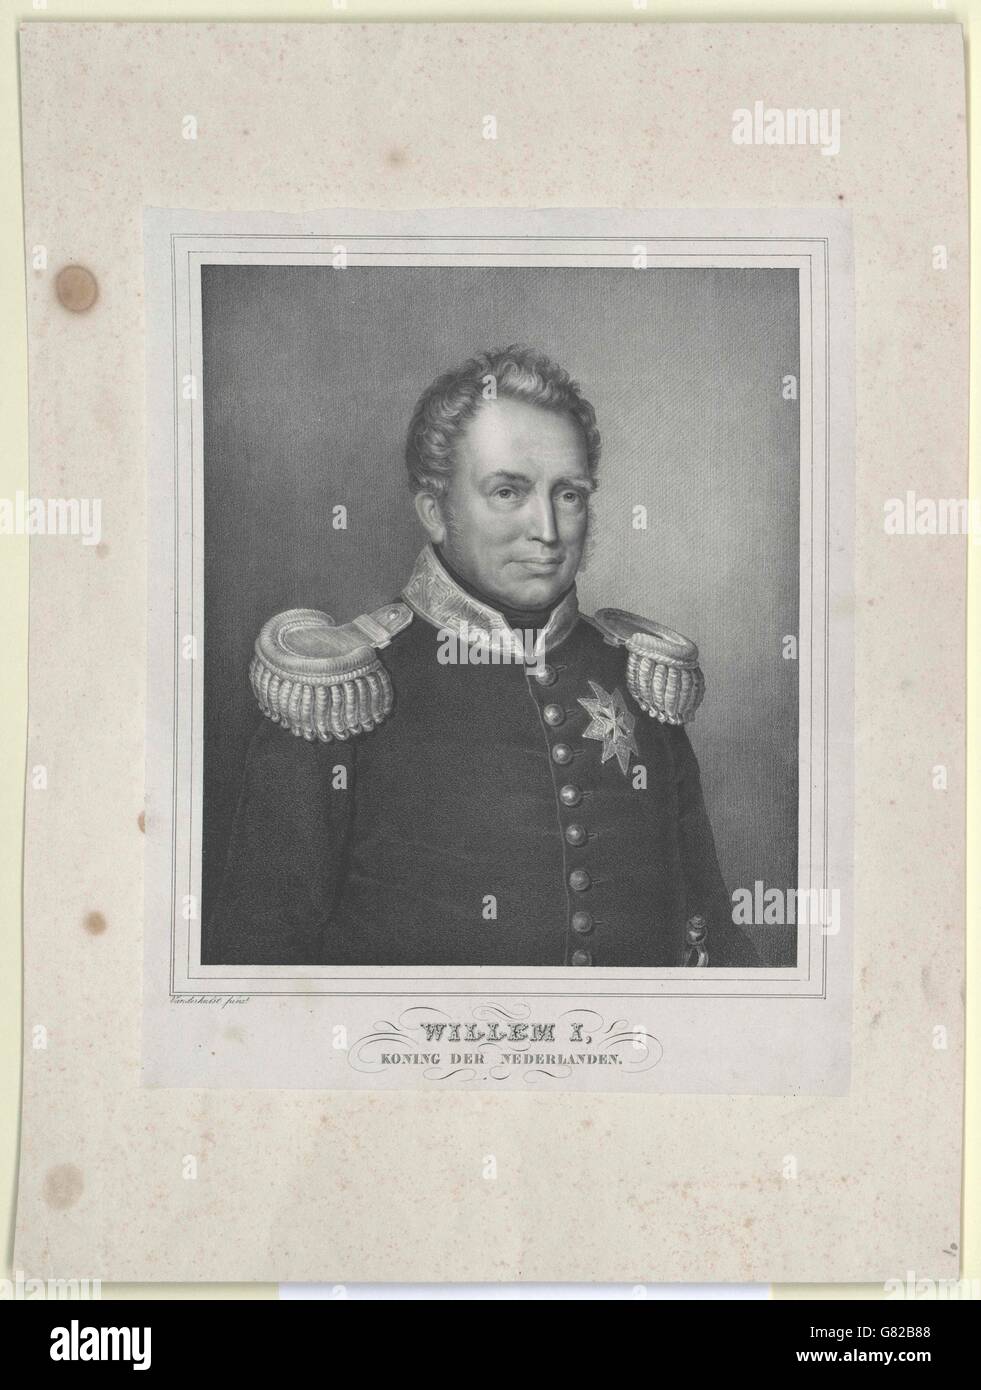 Wilhelm I., König der Niederlande Stock Photo